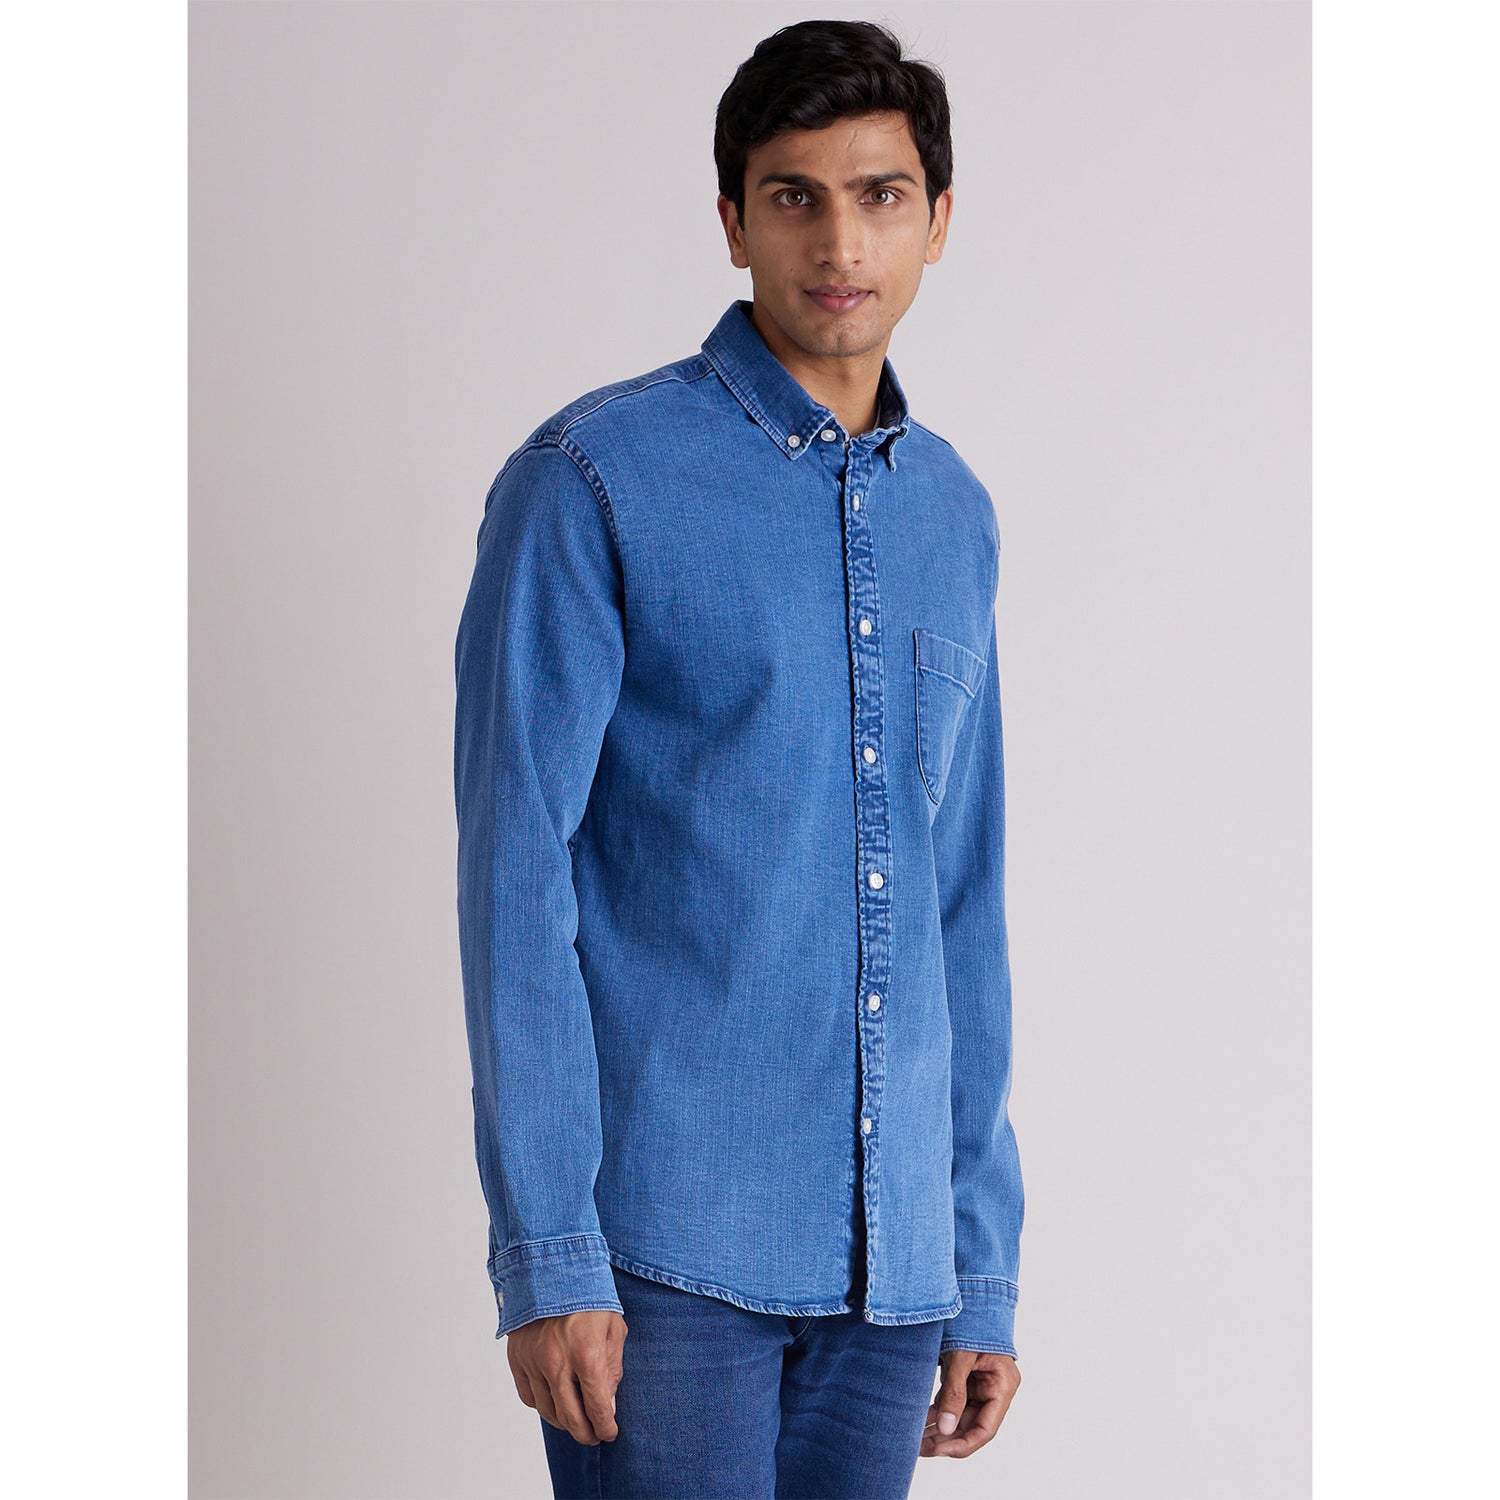 Men Solid Blue Long Sleeve shirt (Various Sizes)